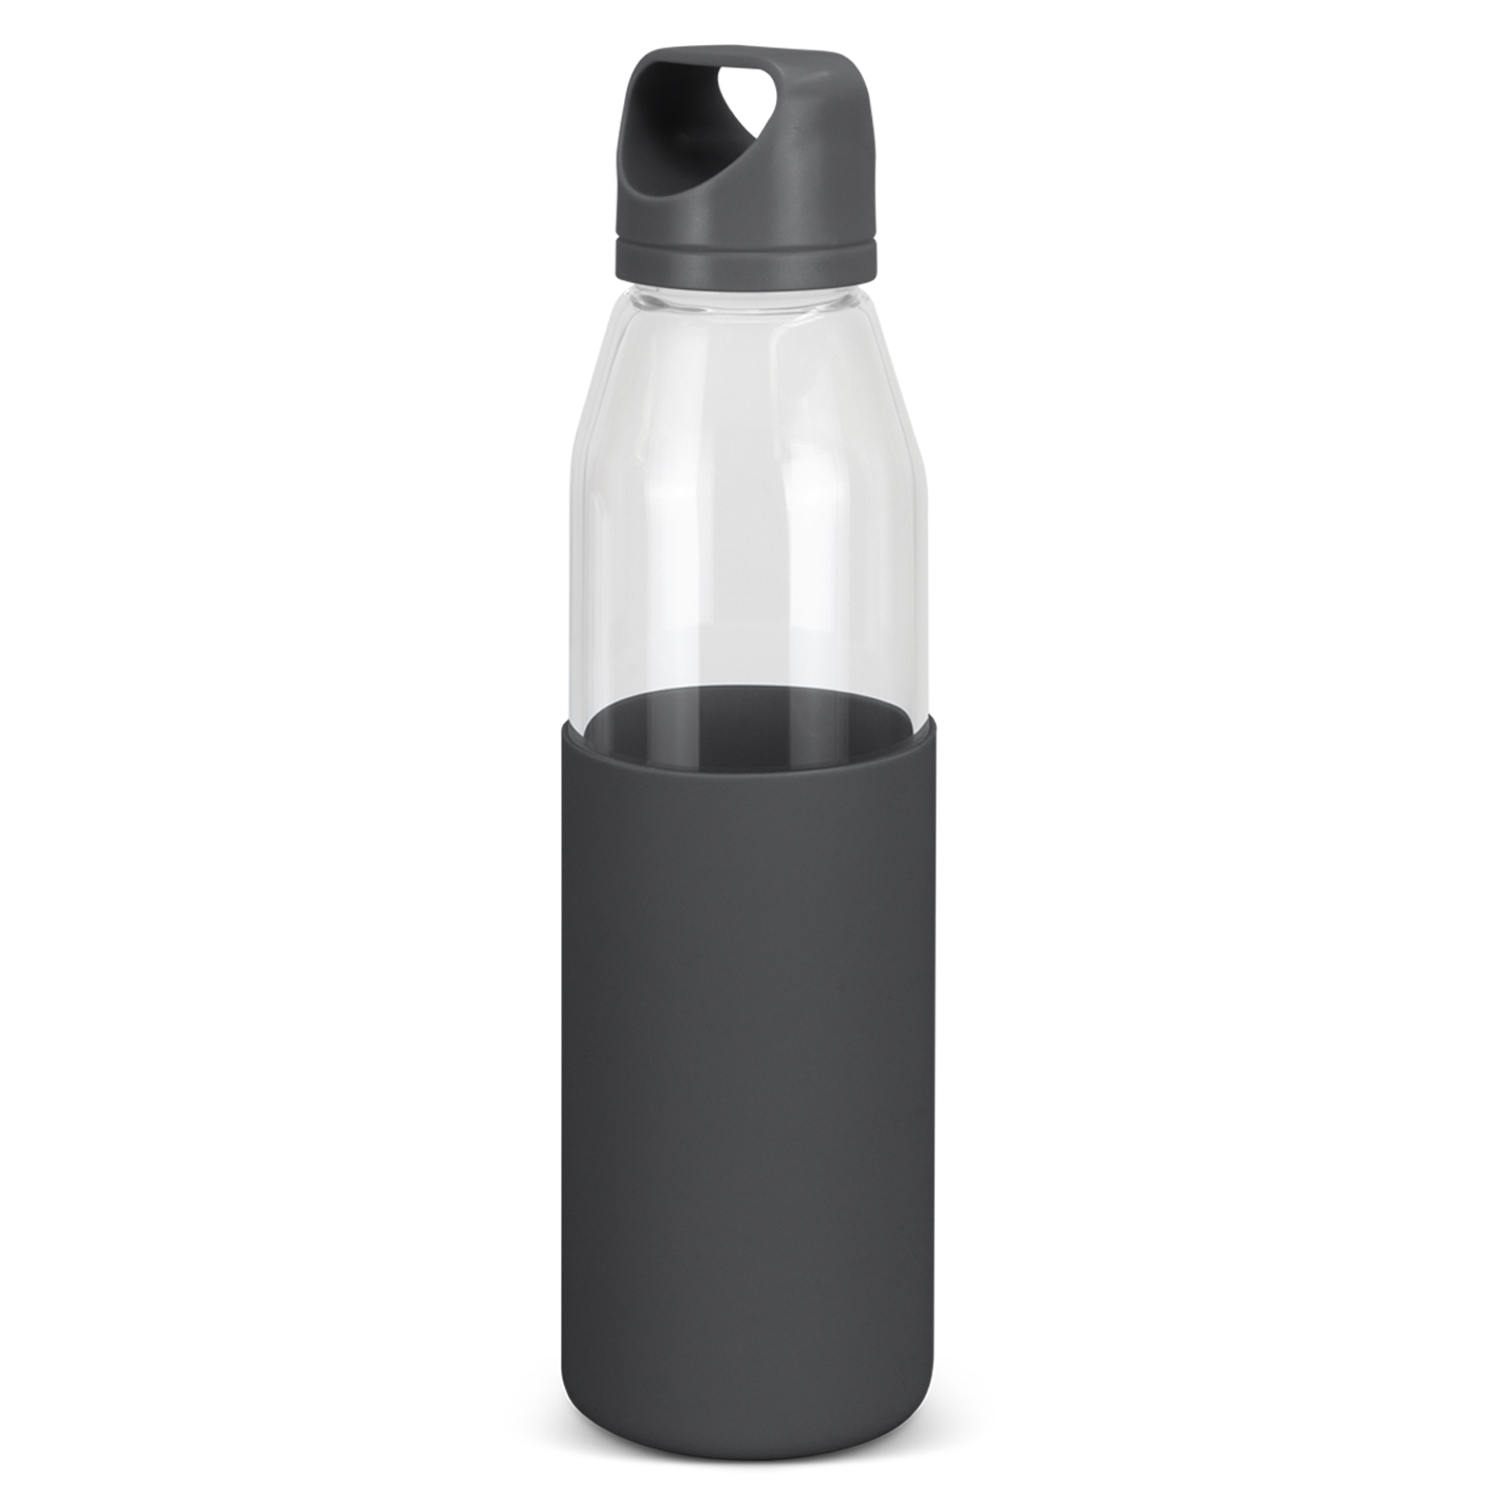 Allure Glass Bottle 124972 | Charcoal